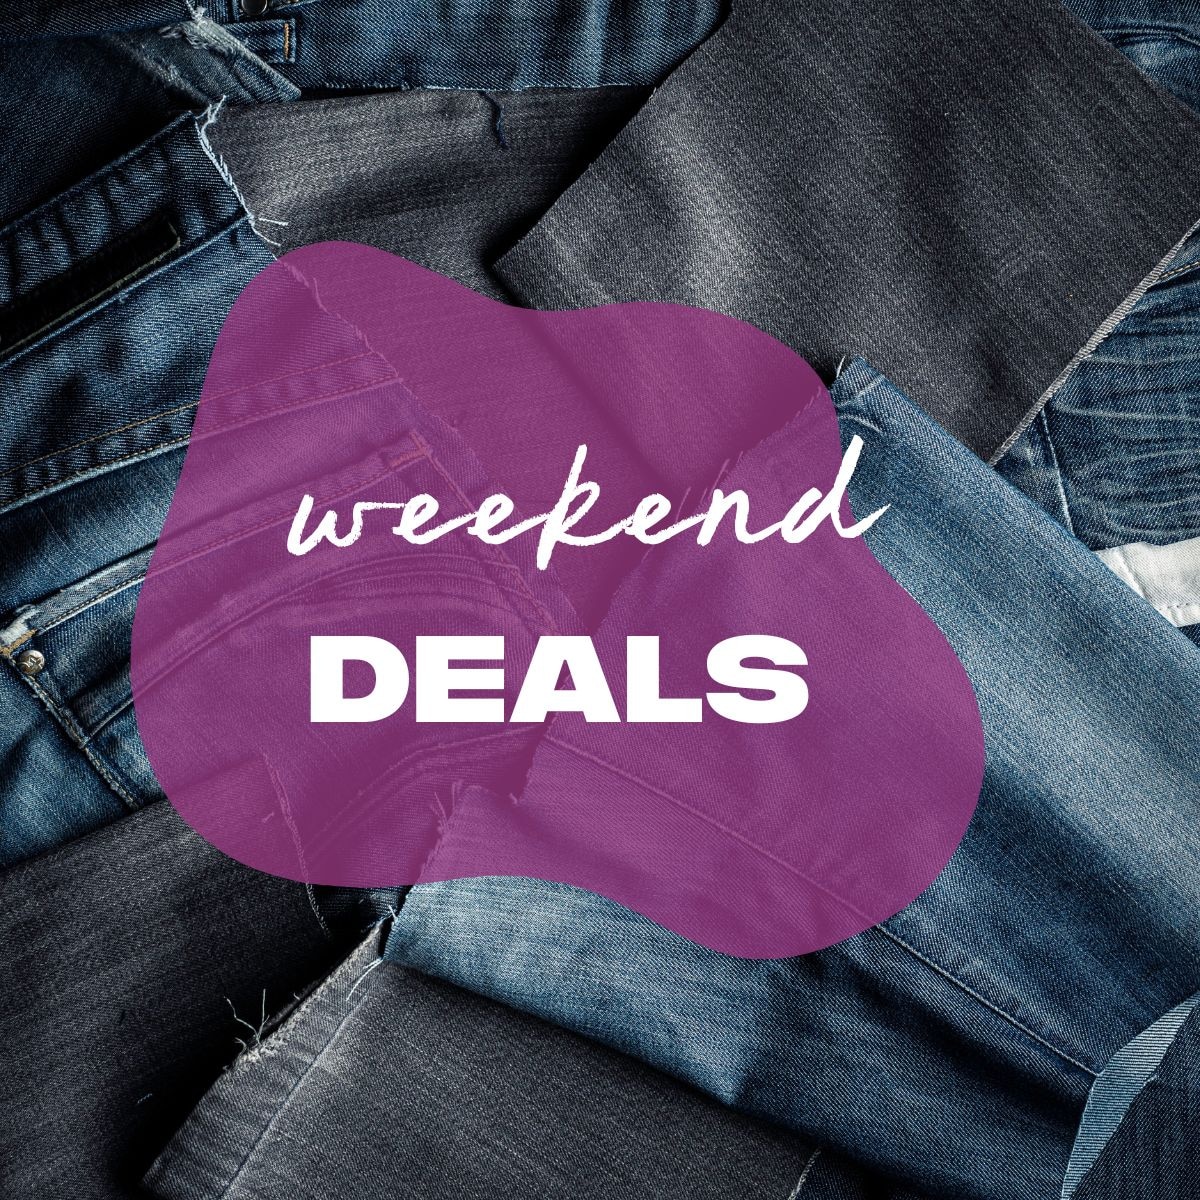 Shop - Weekend Sales - Thumbnail